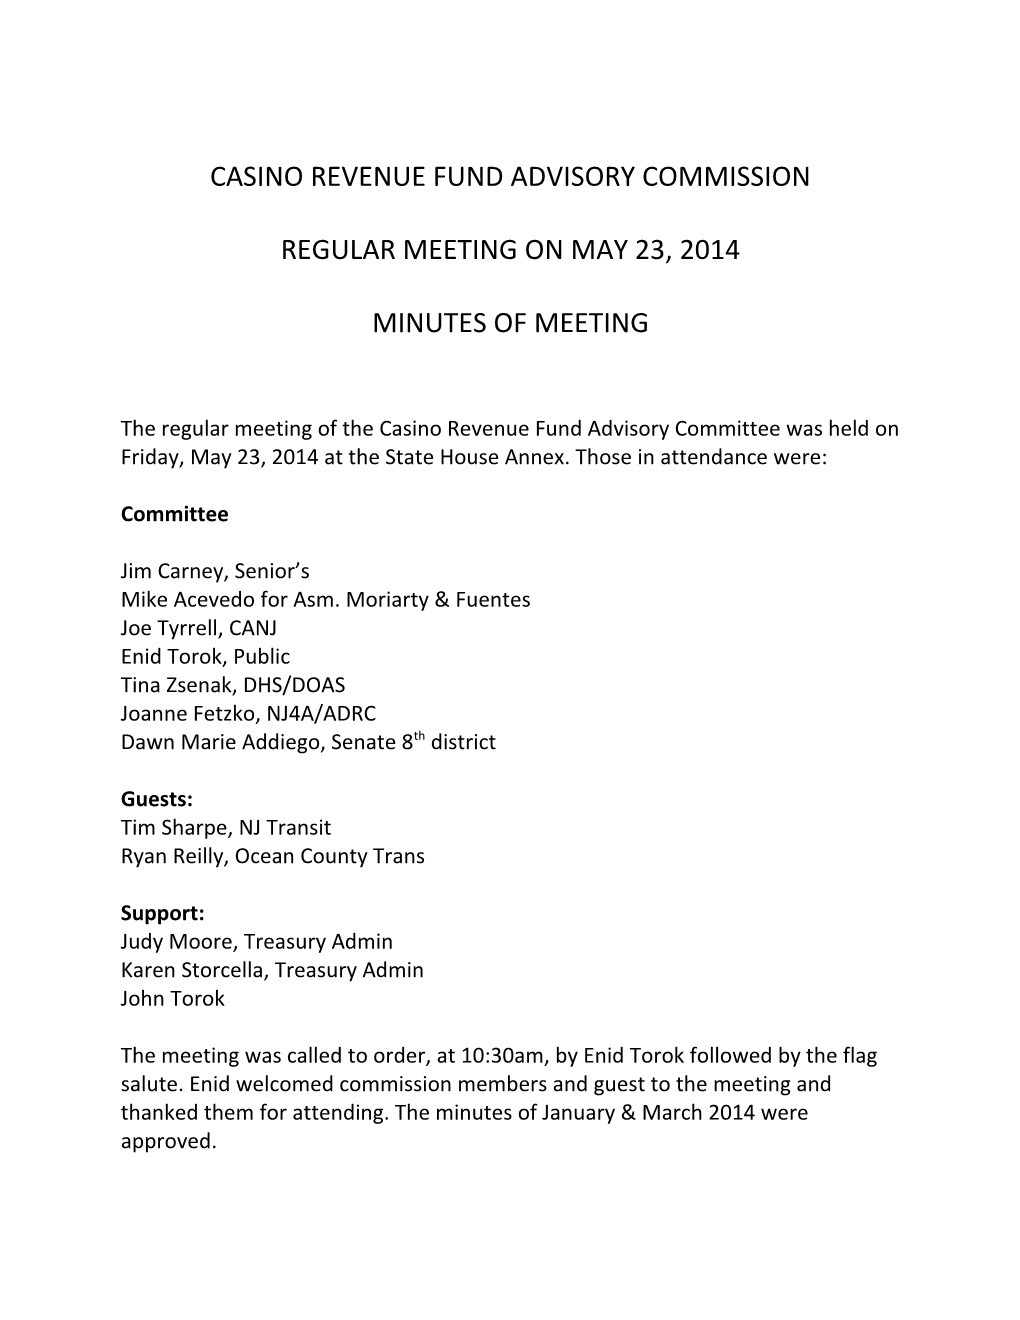 Casino Revenue Fund Advisory Commission